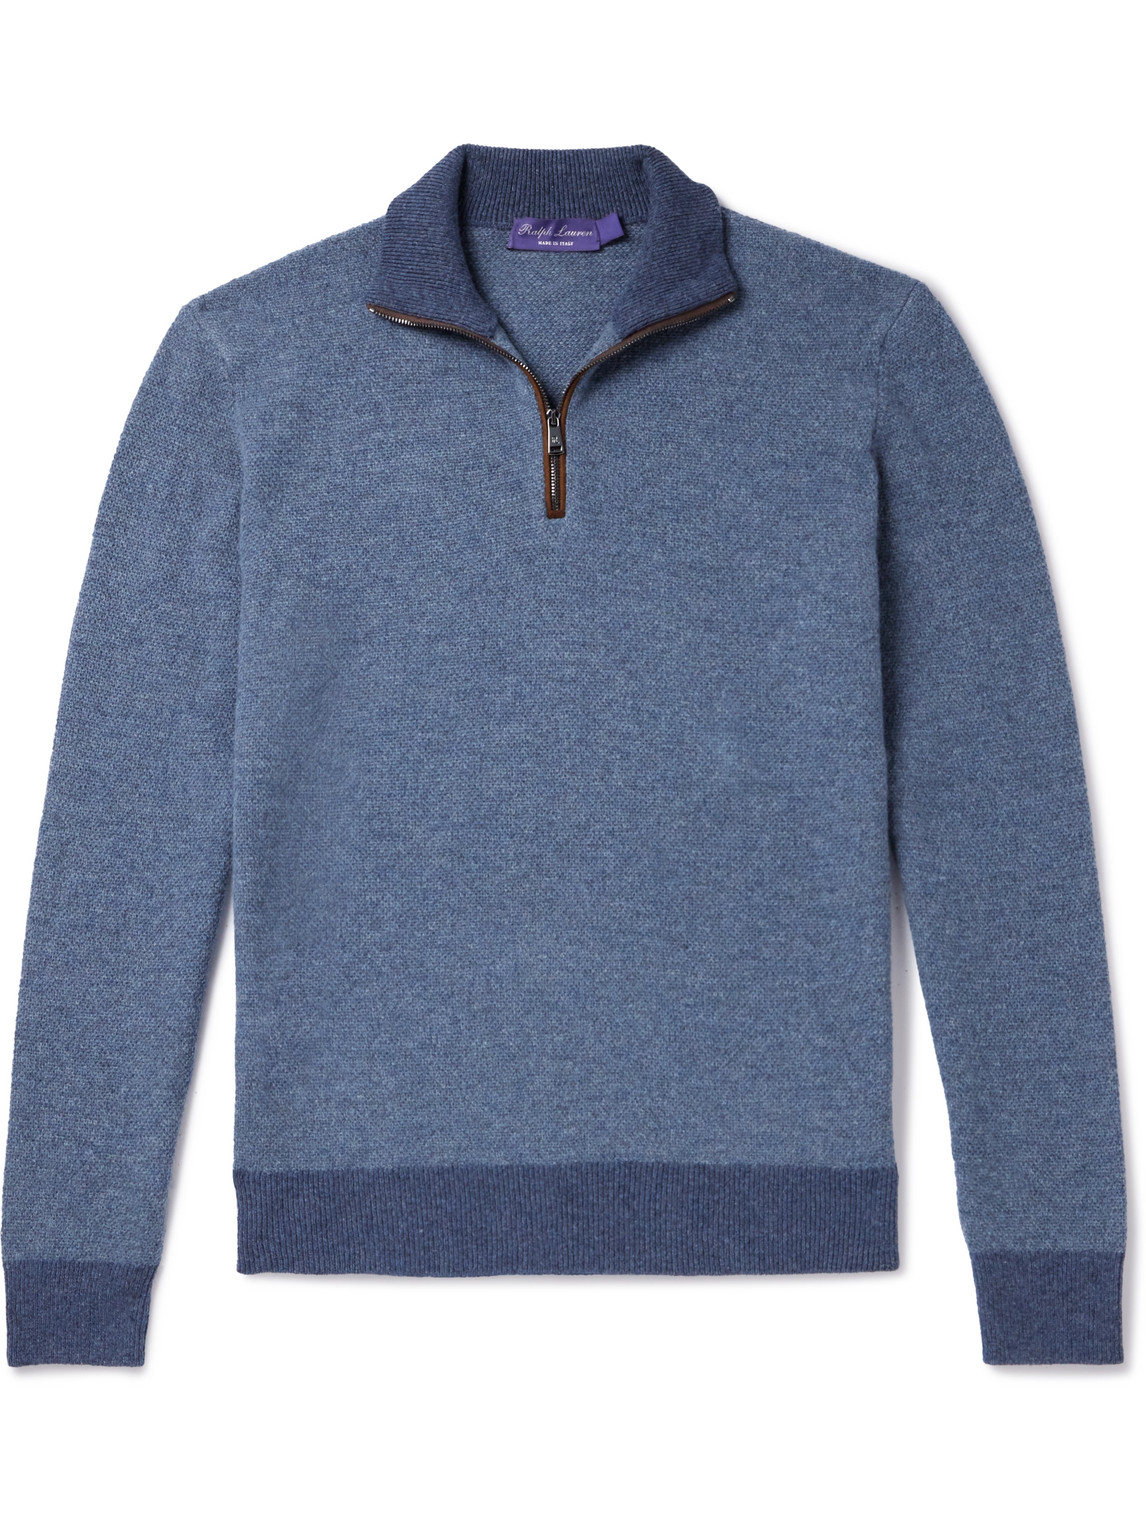 Ralph Lauren Purple Label - Suede-Trimmed Cashmere Half-Zip Sweater - Men - Blue - S von Ralph Lauren Purple Label